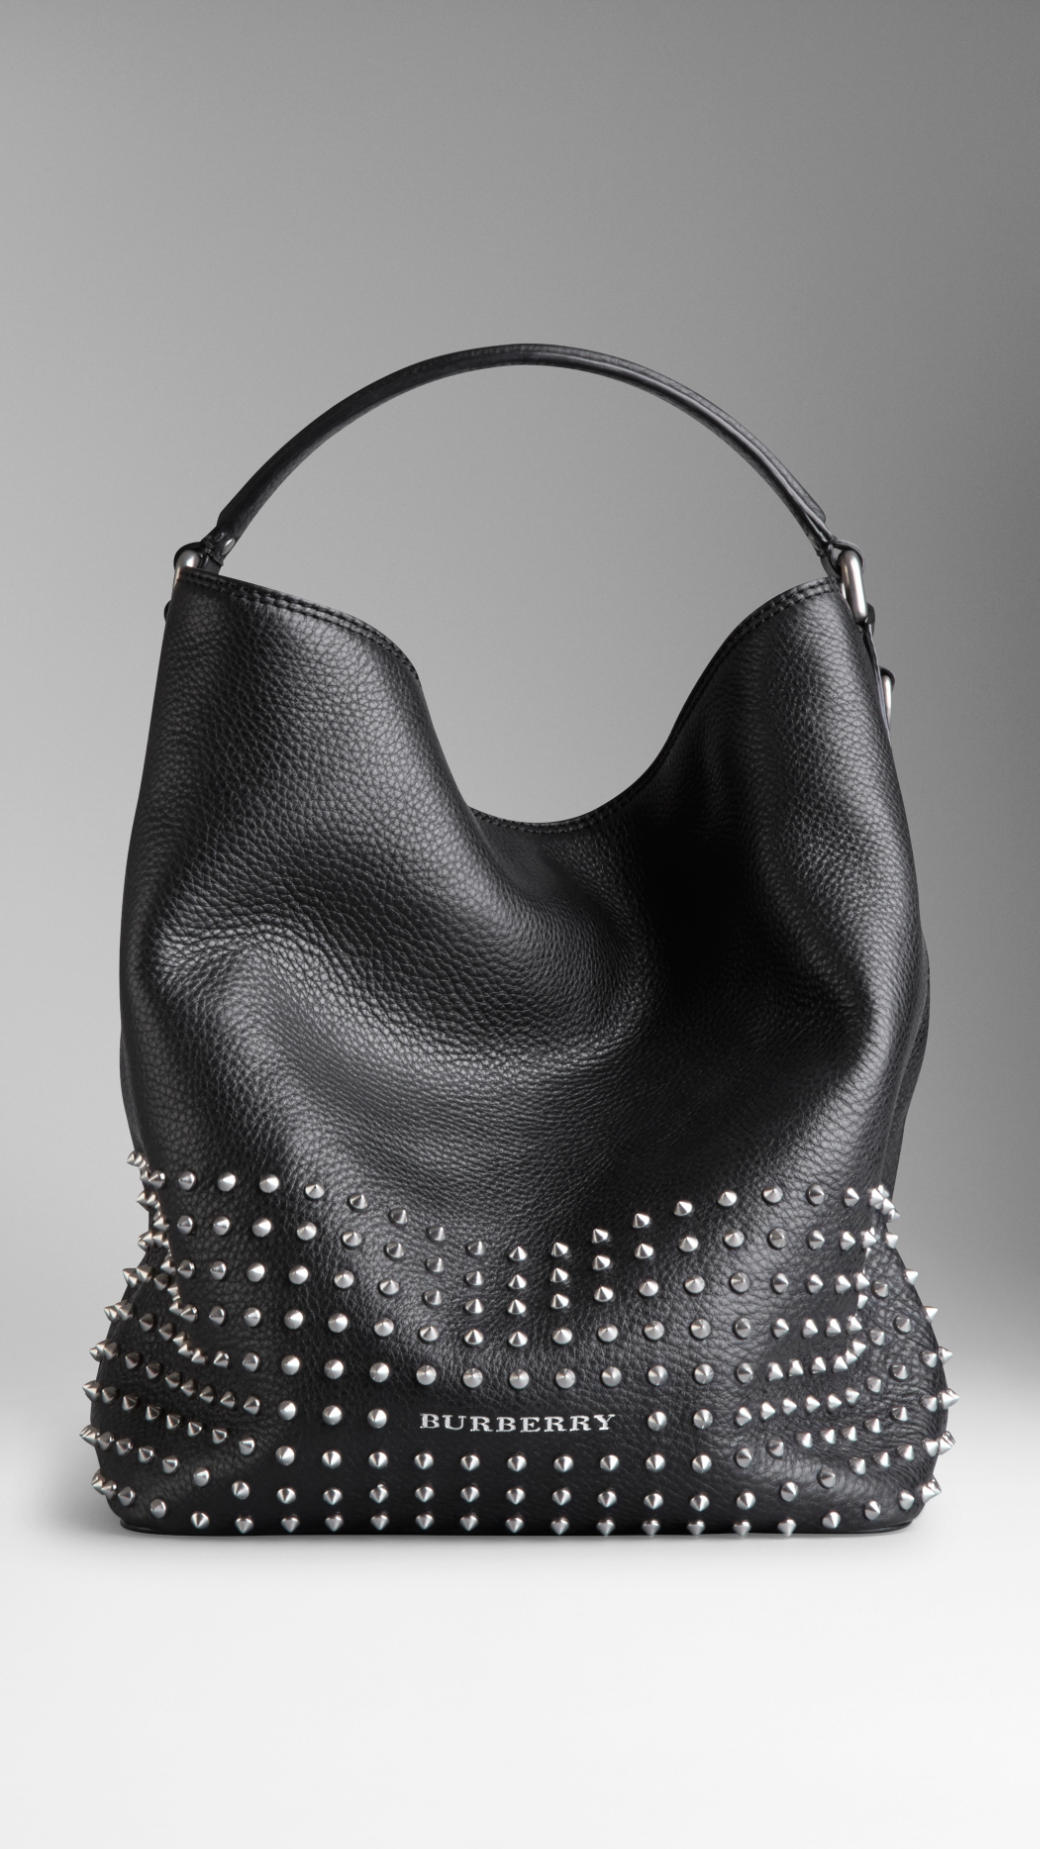 Burberry Medium Studded Leather Hobo Bag in Black | Lyst